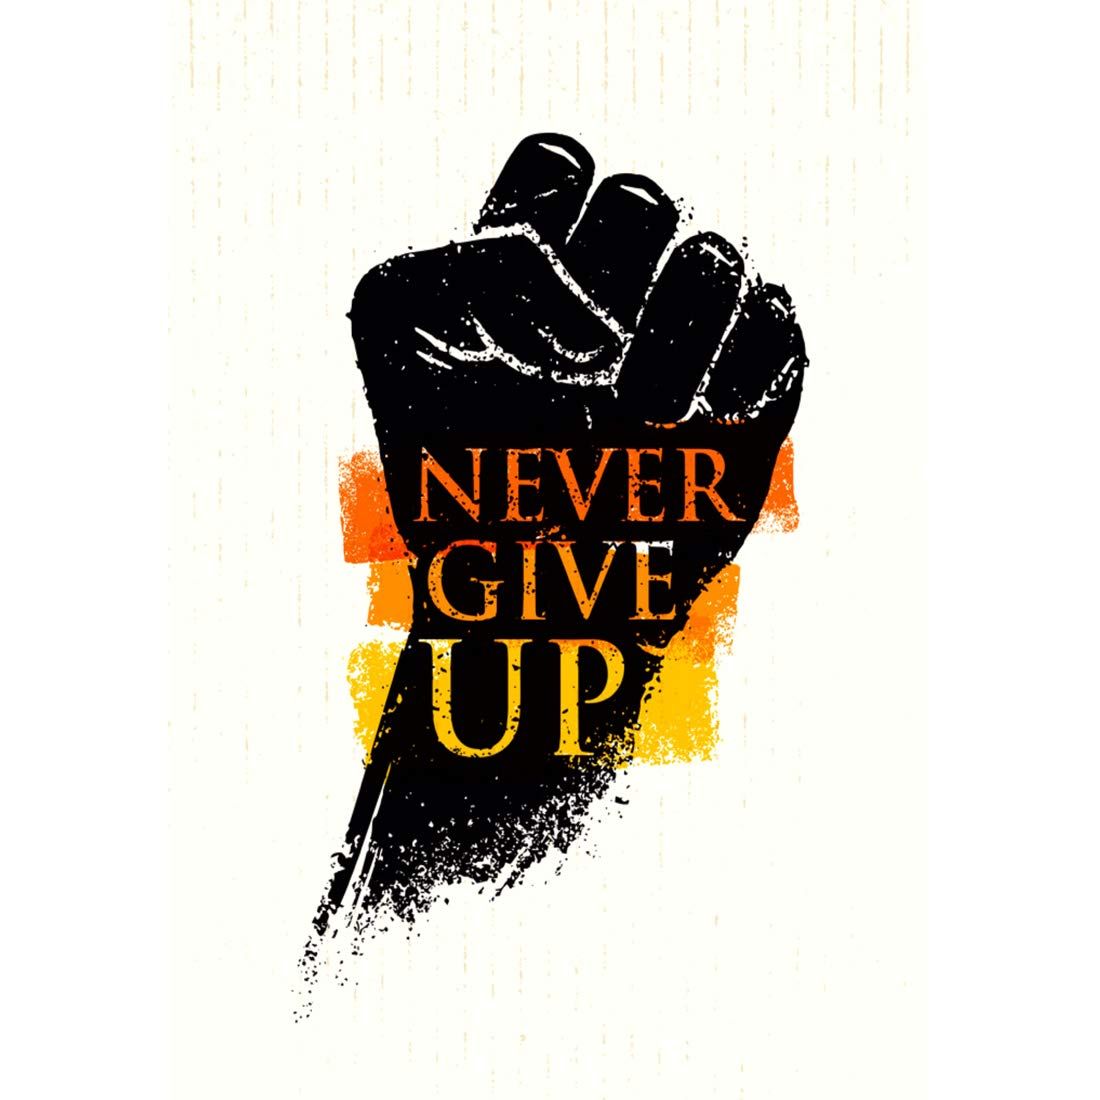 Never live up. Плакат Черчилль never give up.